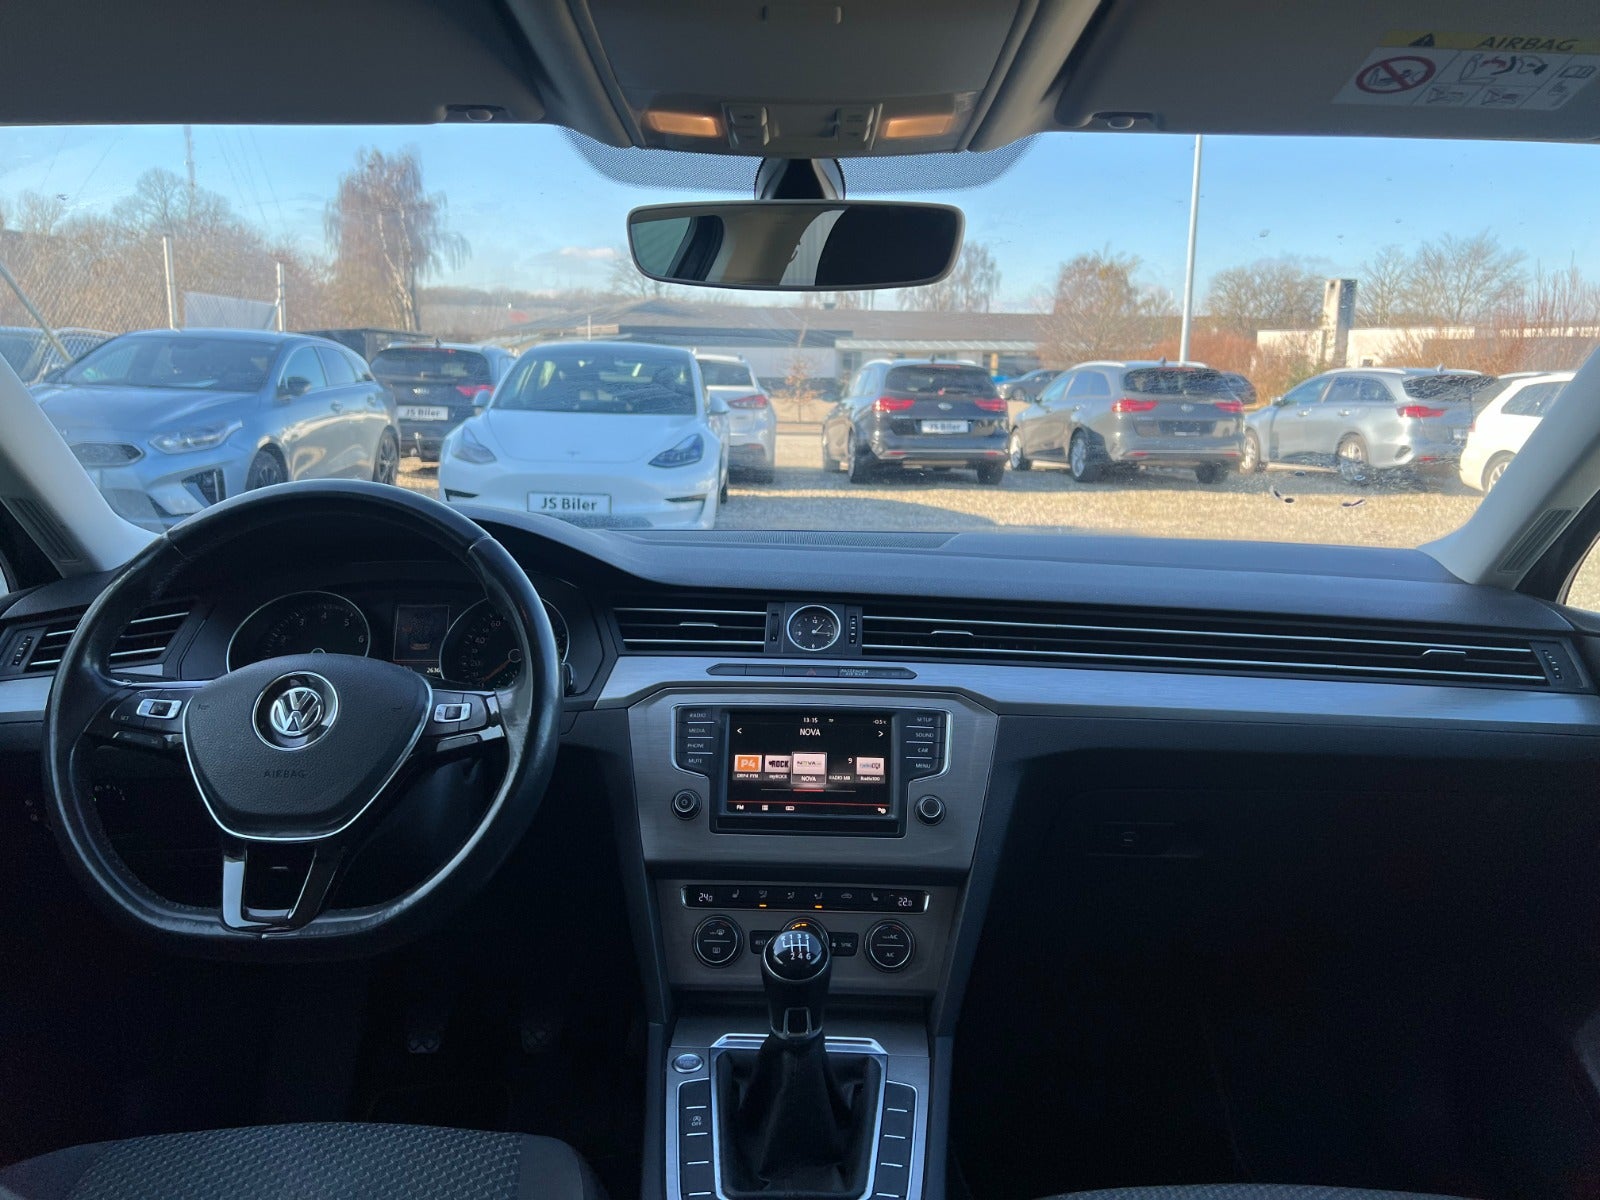 VW Passat 2015